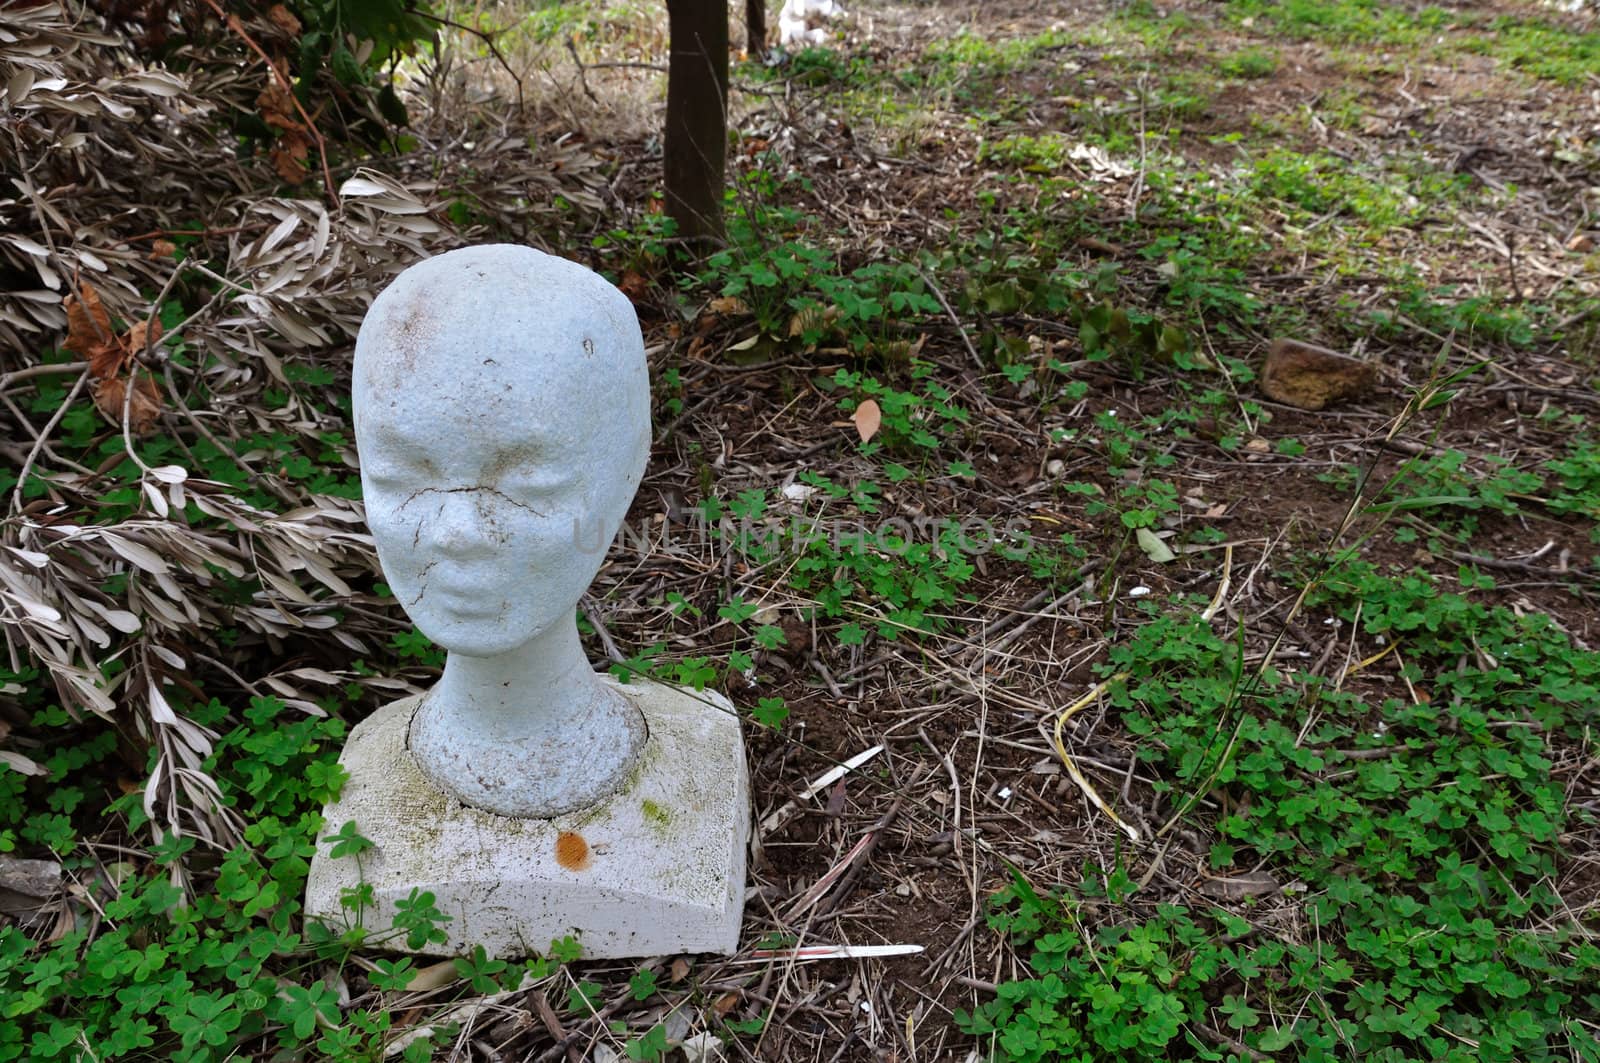 Dirty mannequin styrofoam head in abandoned garden.